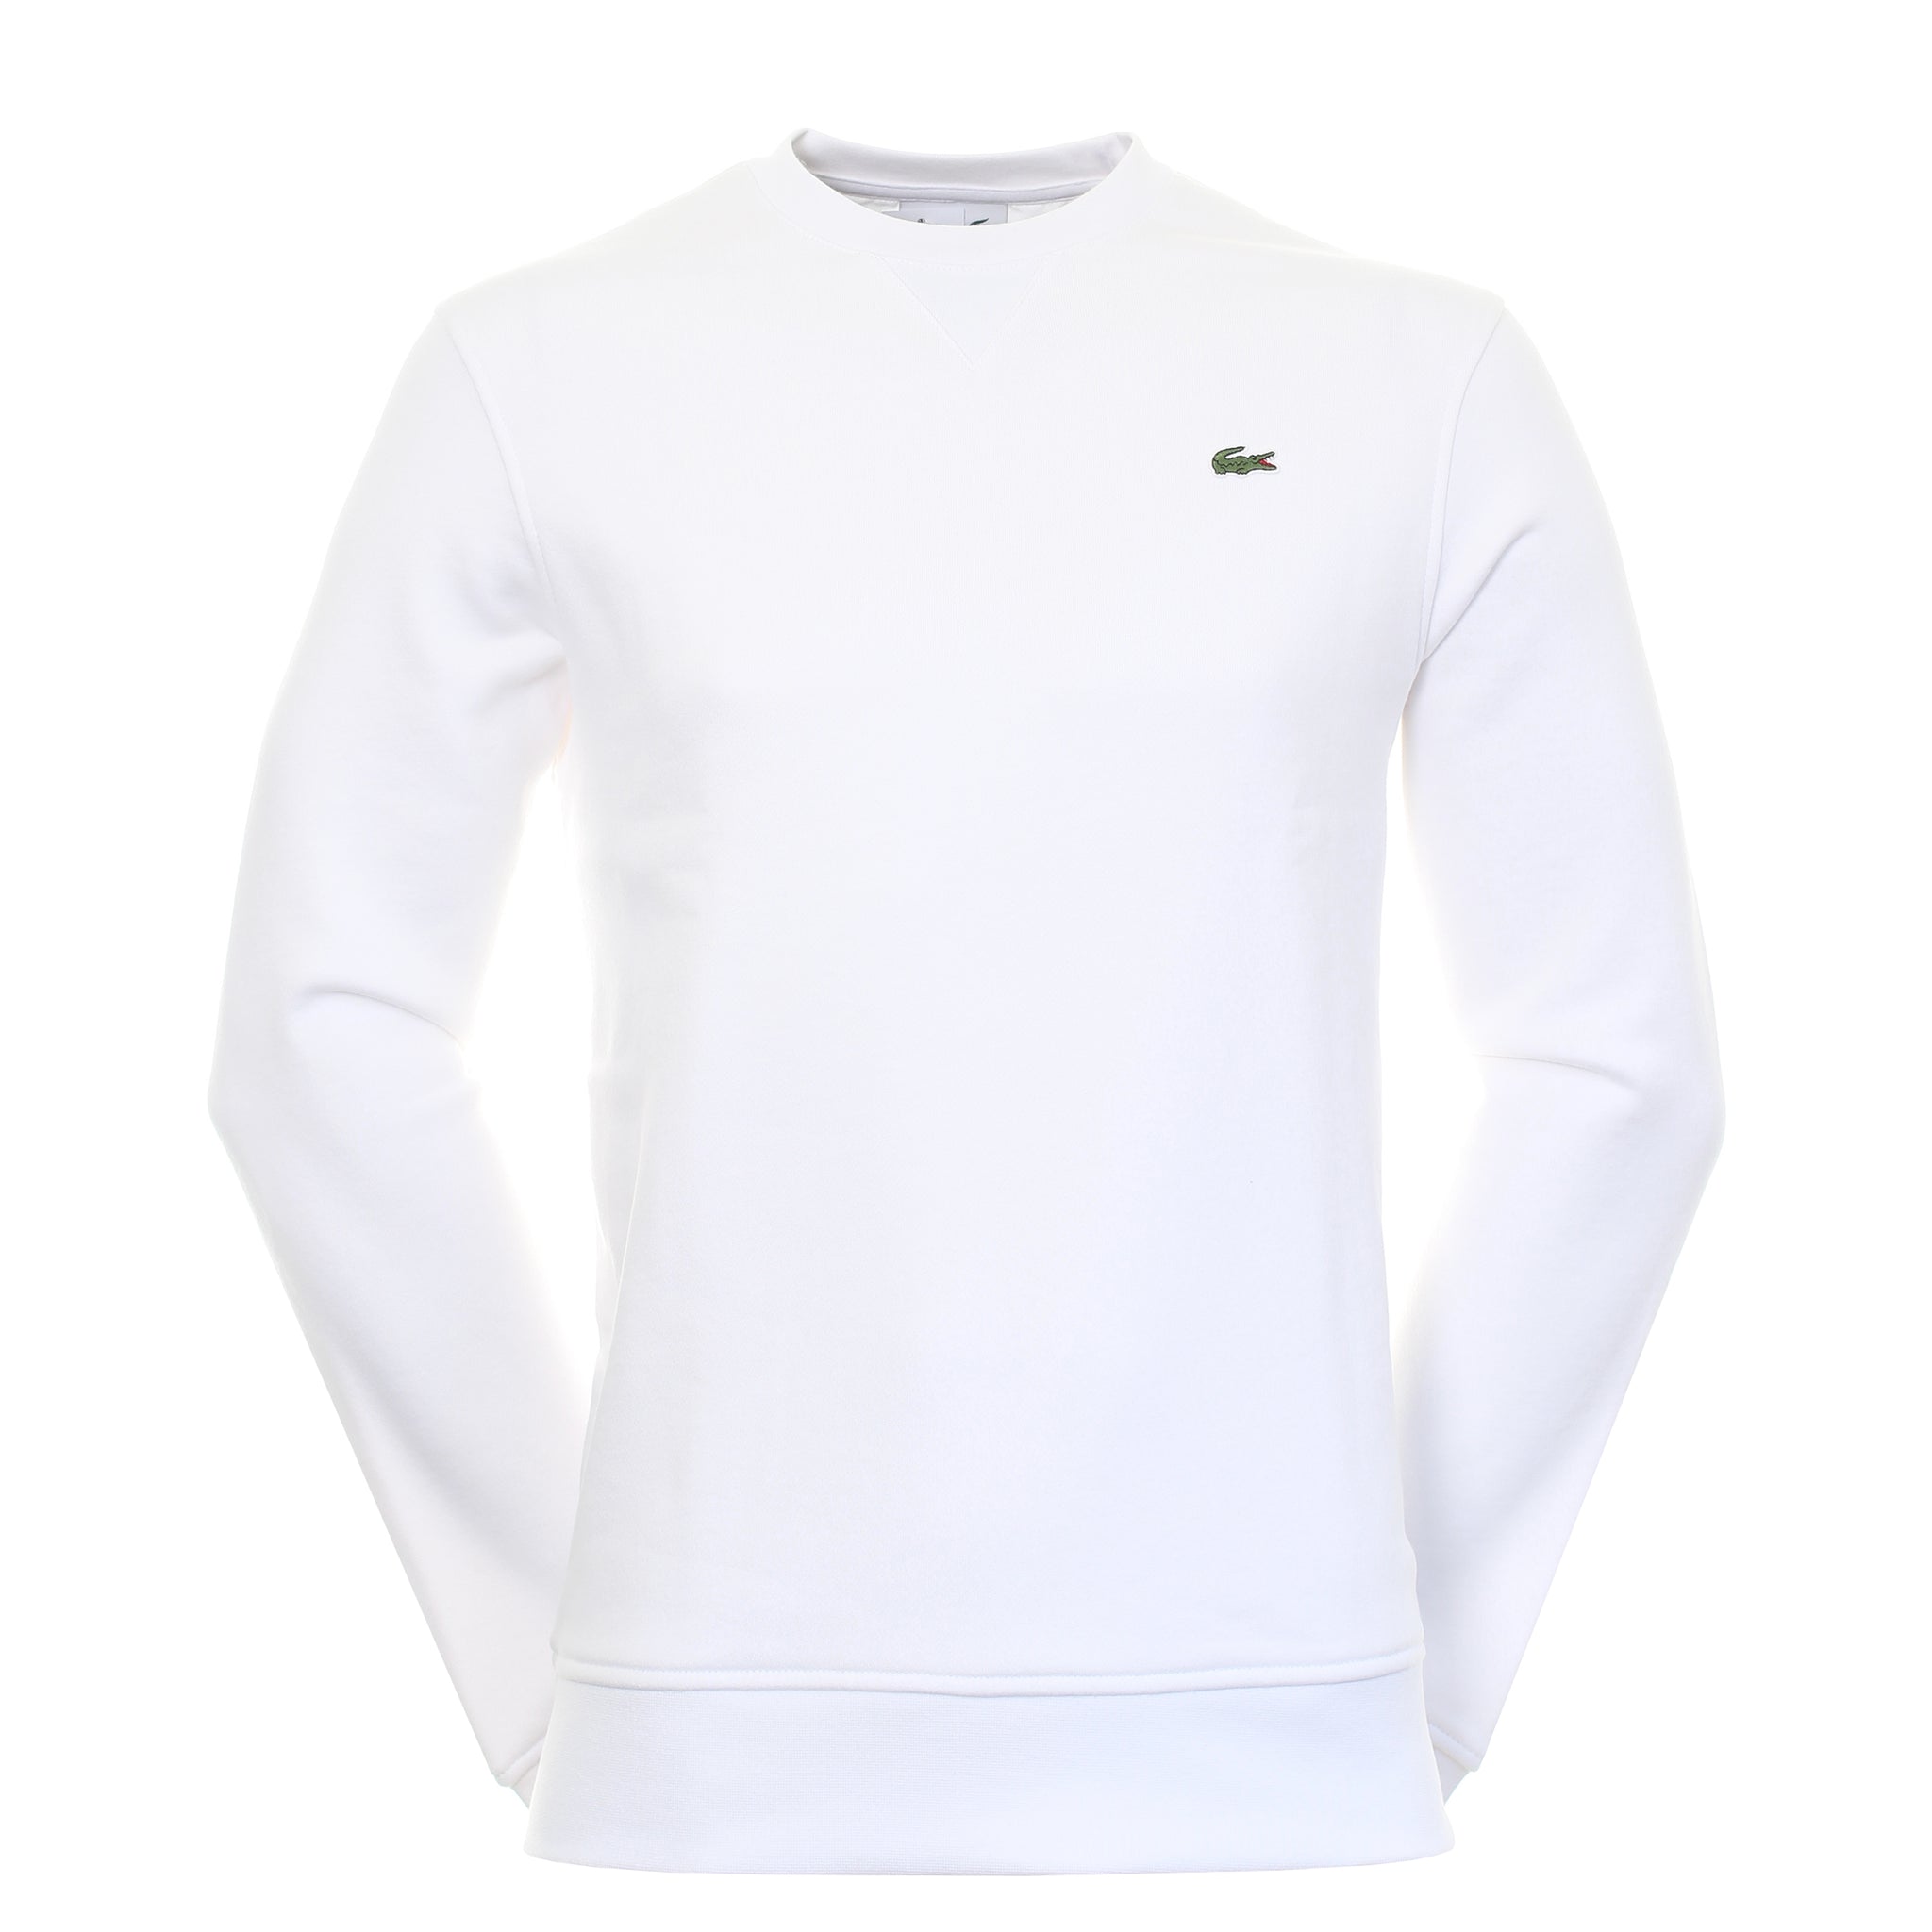 Lacoste Cotton Fleece Crew Sweater SH1505 White 800 | Function18